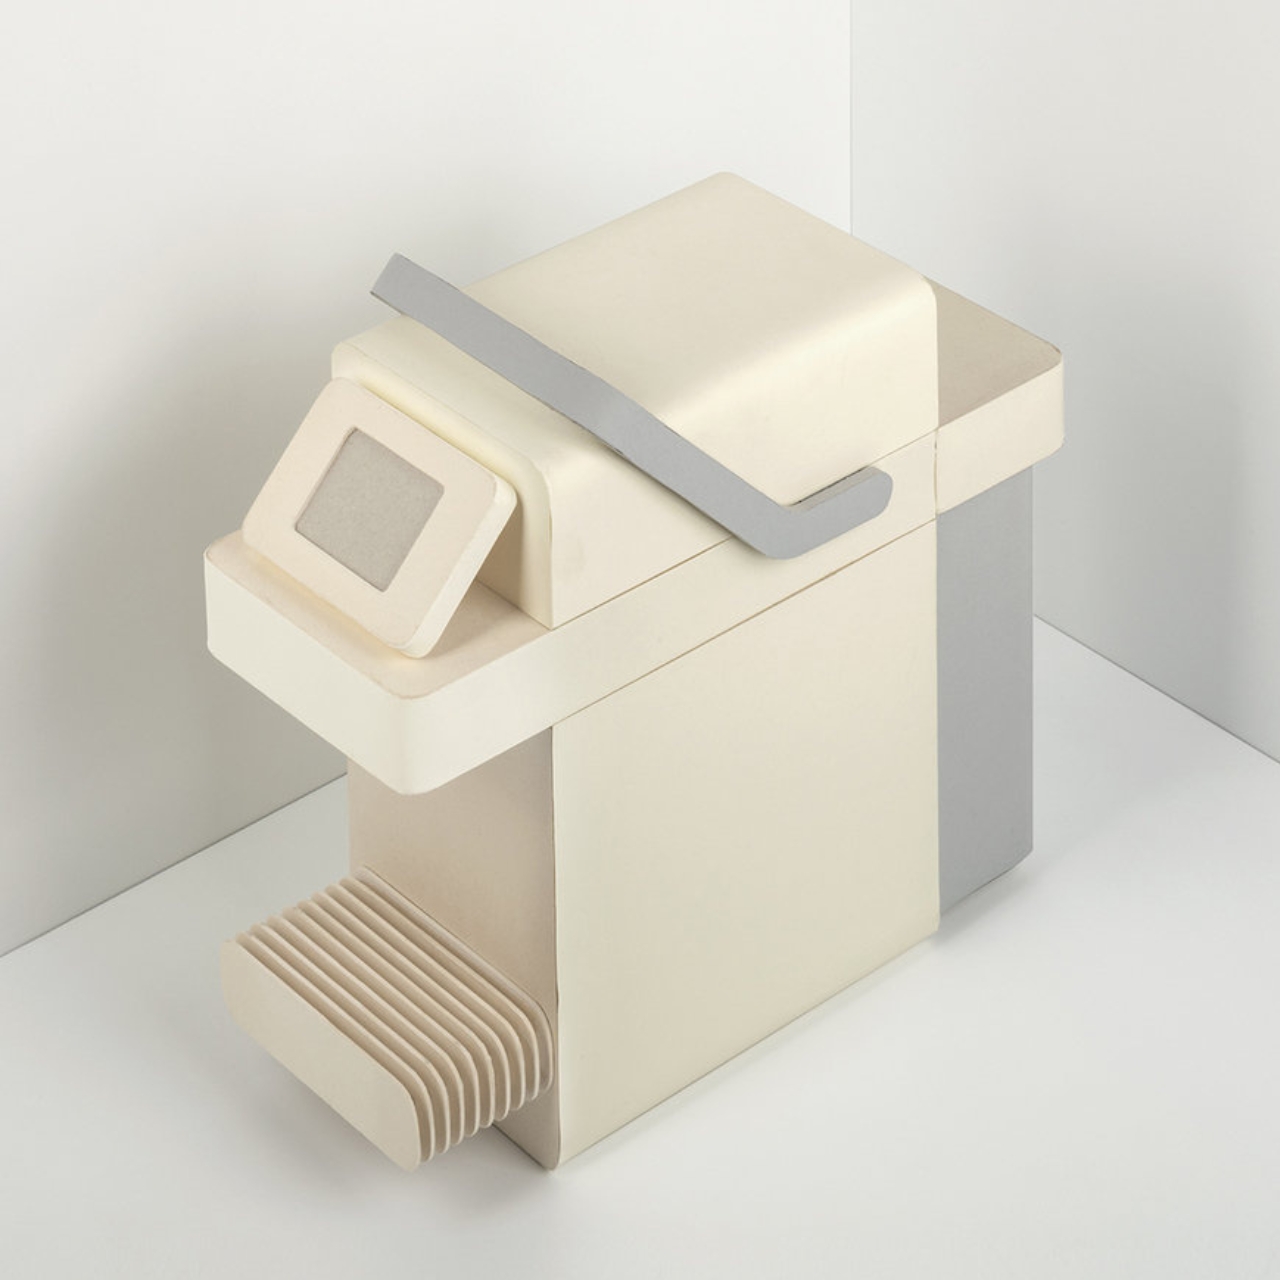 Minimalist coffee machine concept gives off brutalist design vibes